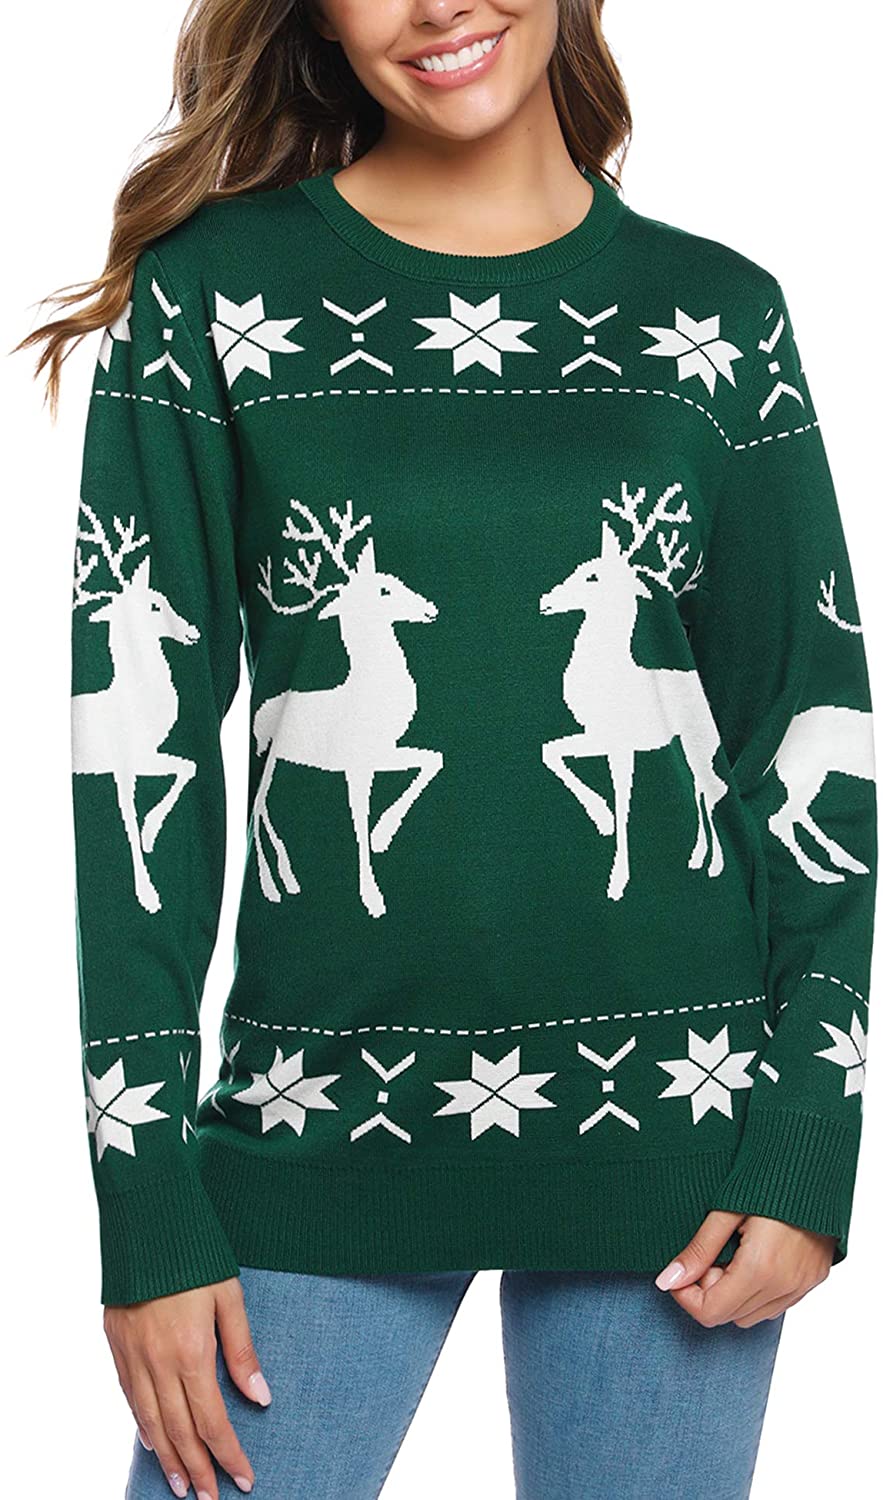 iClosam Women's Christmas Reindeer Snowflakes Tree Patterns Sweater ...